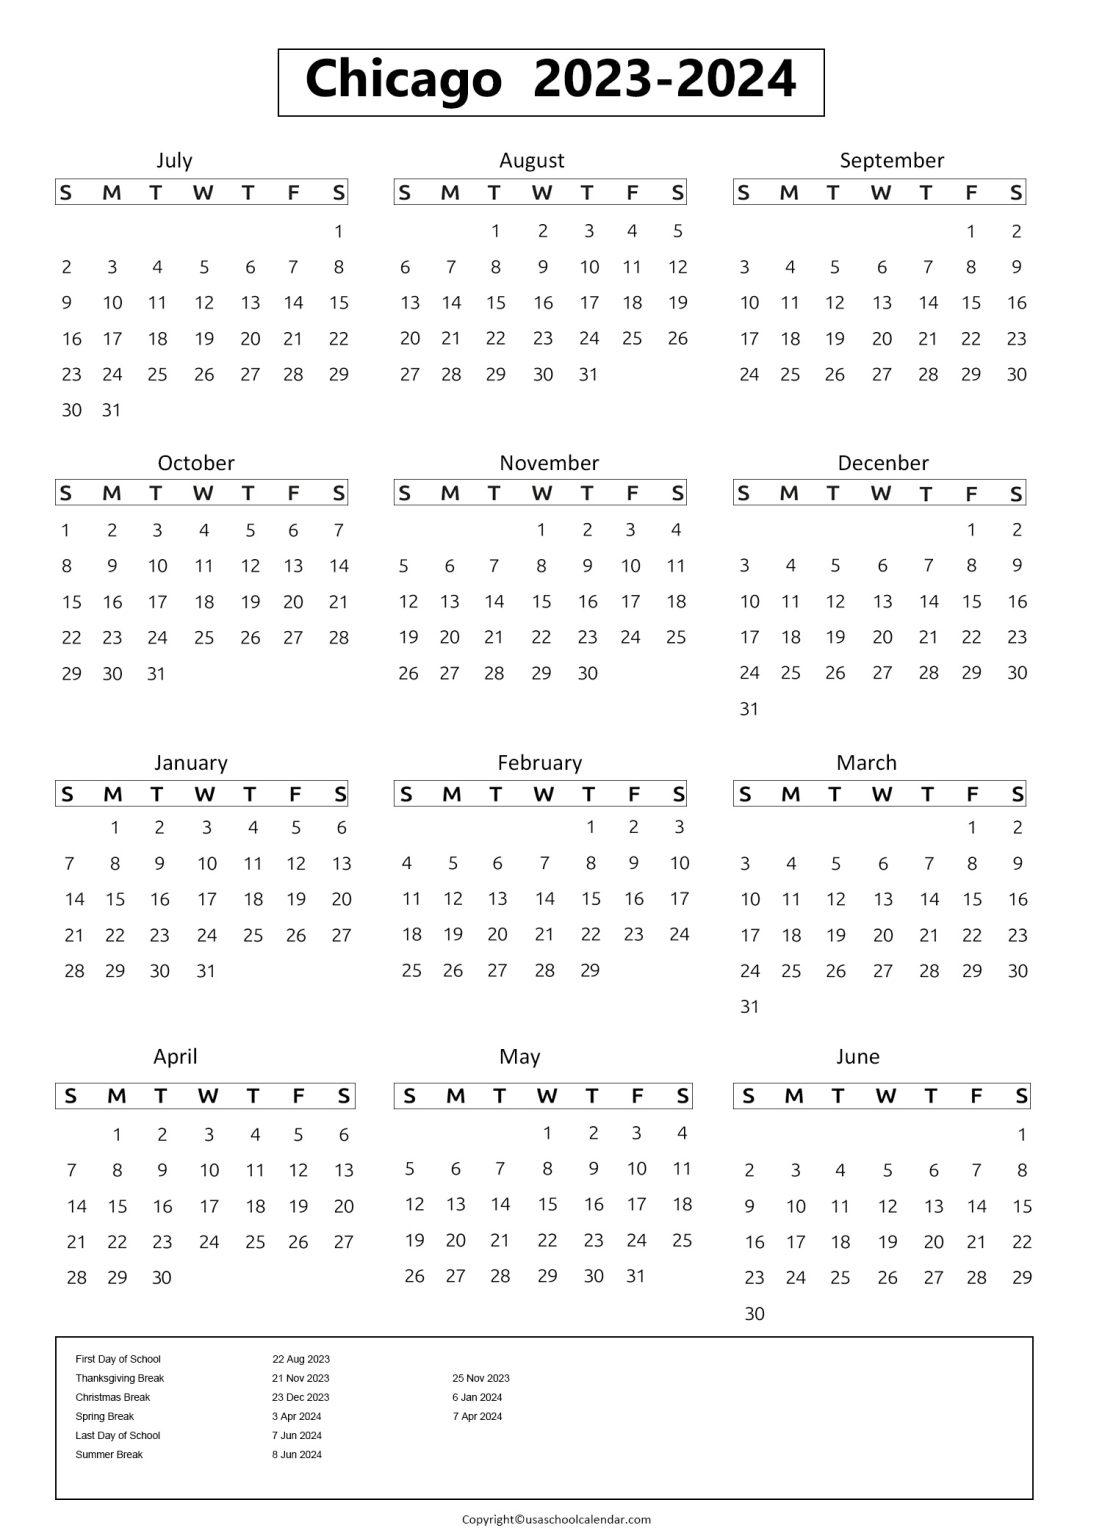 Chicago Public Schools Calendar & Holidays 20232024 [CPS]